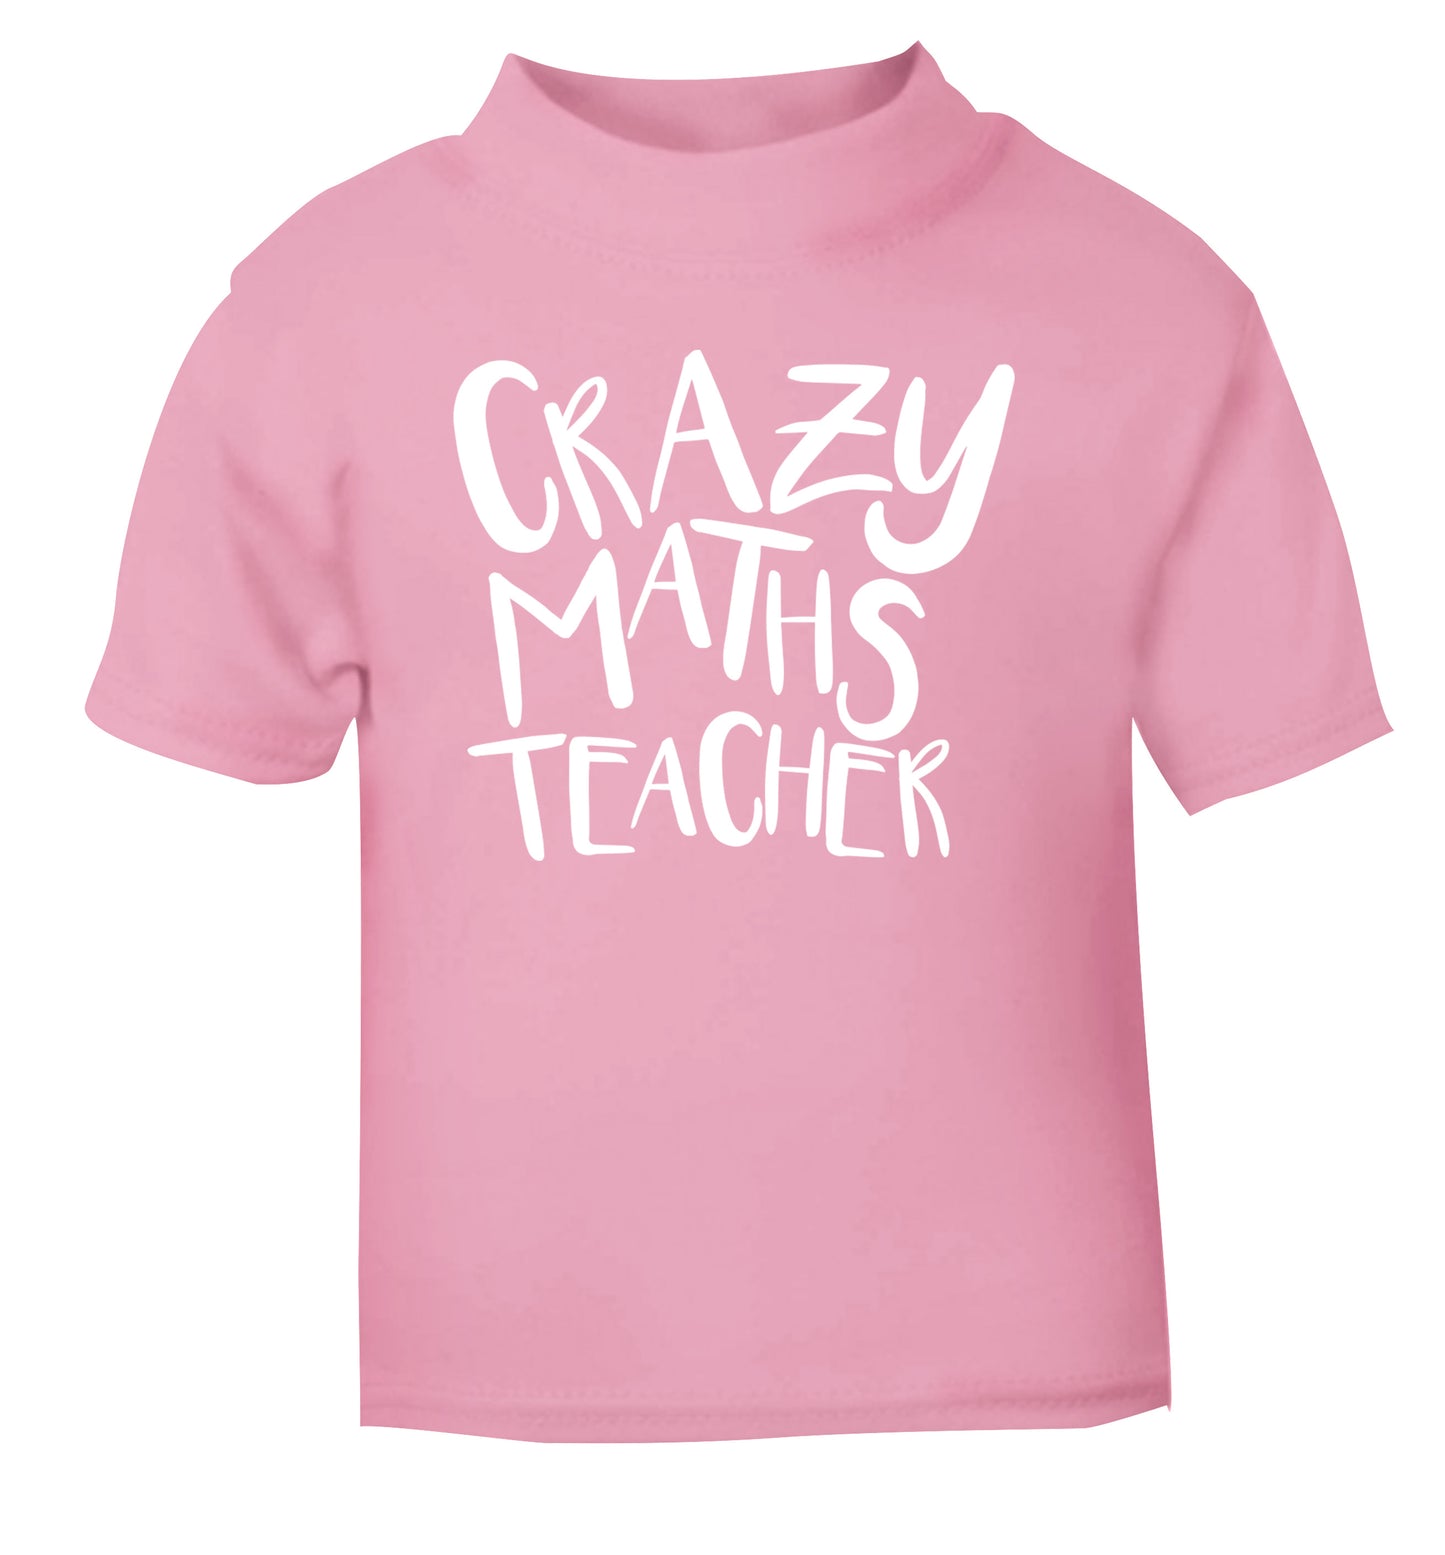 Crazy maths teacher light pink Baby Toddler Tshirt 2 Years